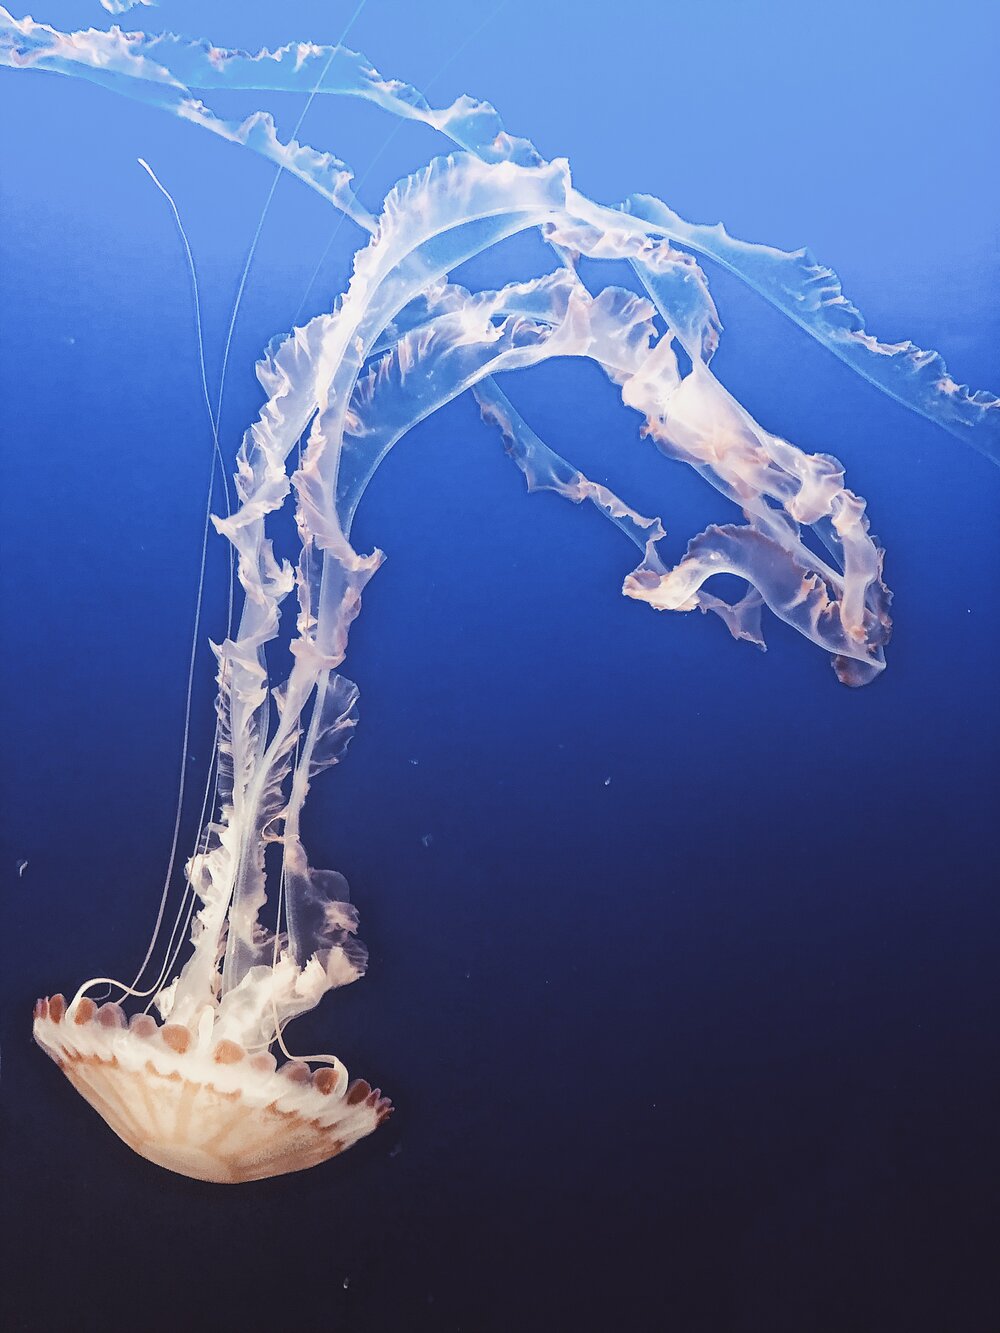 Jellyfish at The Monterey Bay Aquarium